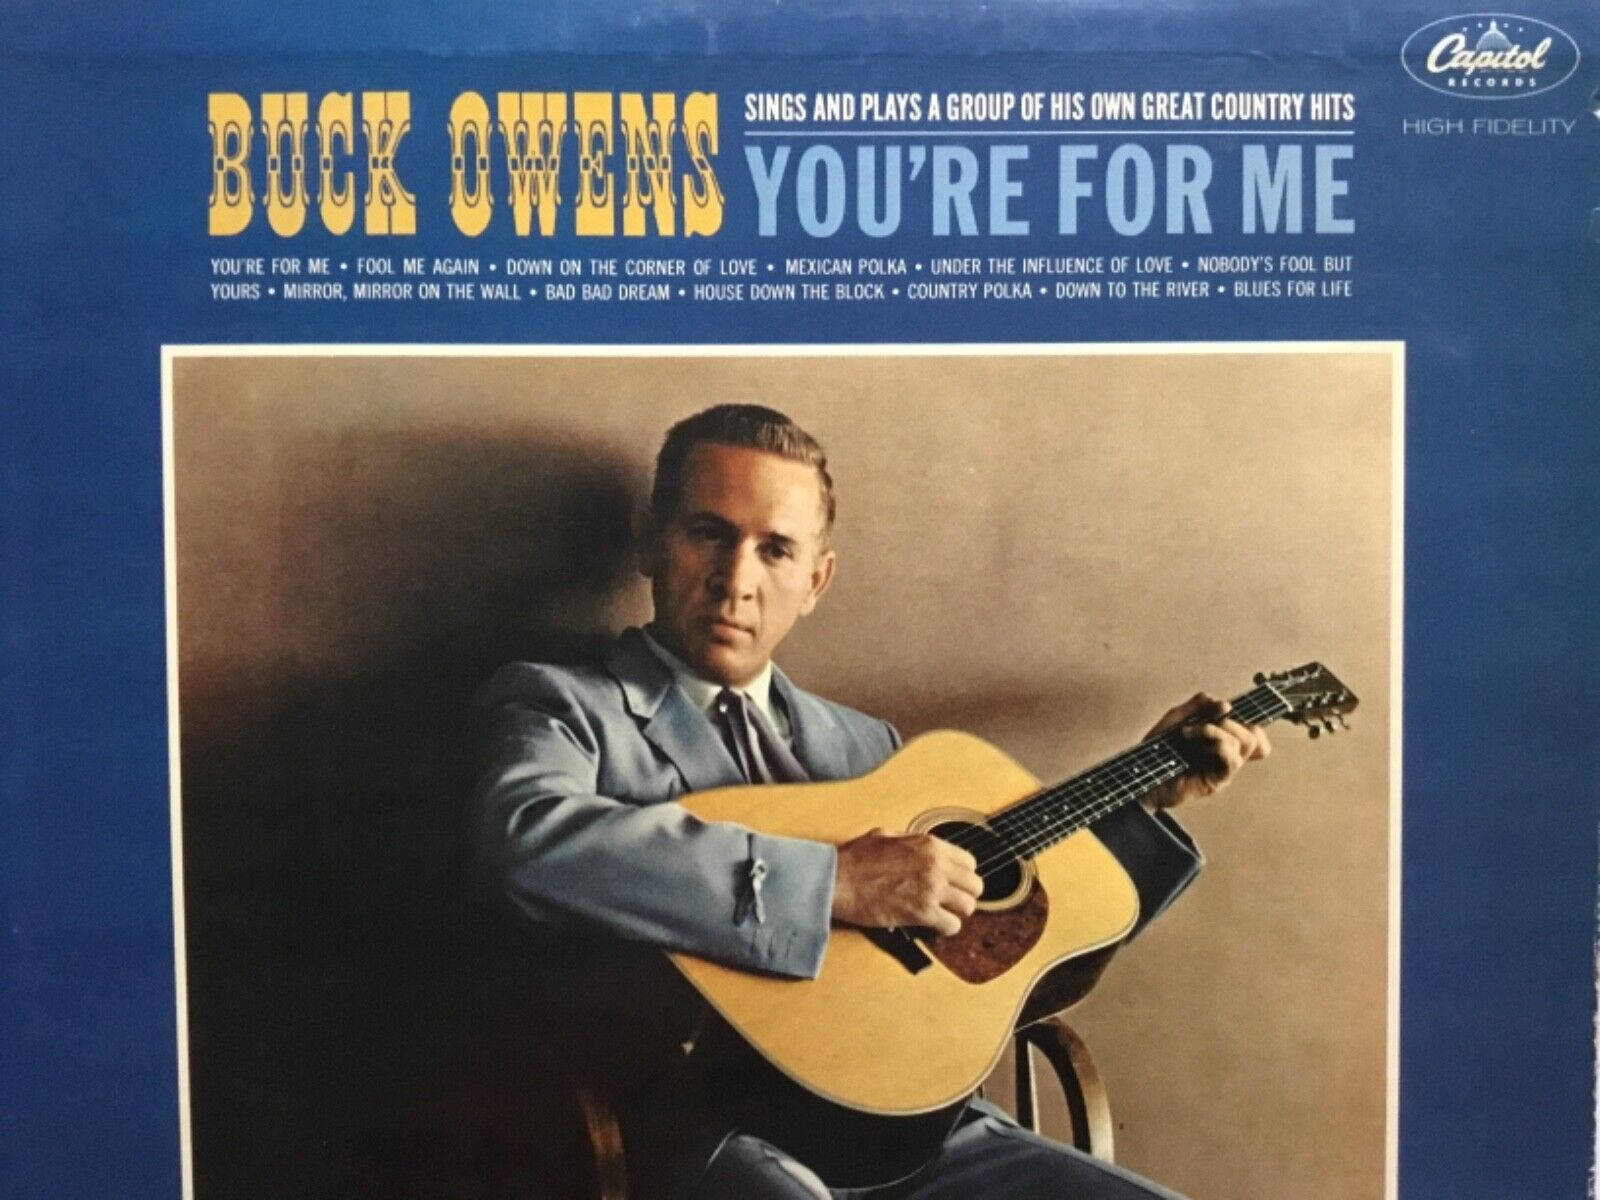 Buck Owens You're For Me Album Cover Wallpaper